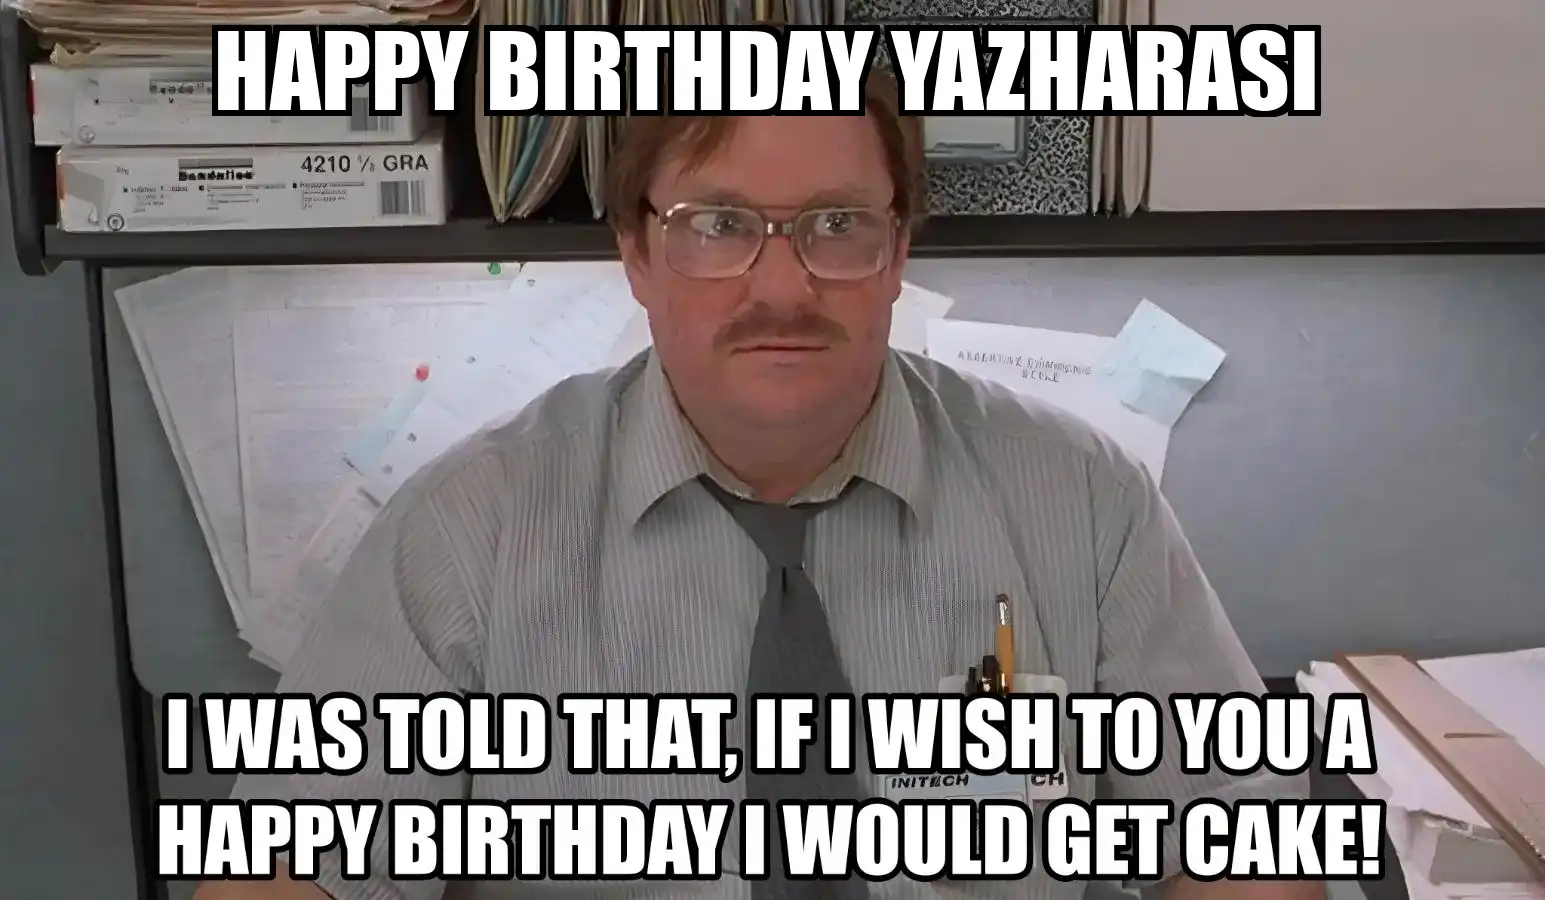 Happy Birthday Yazharasi I Would Get A Cake Meme